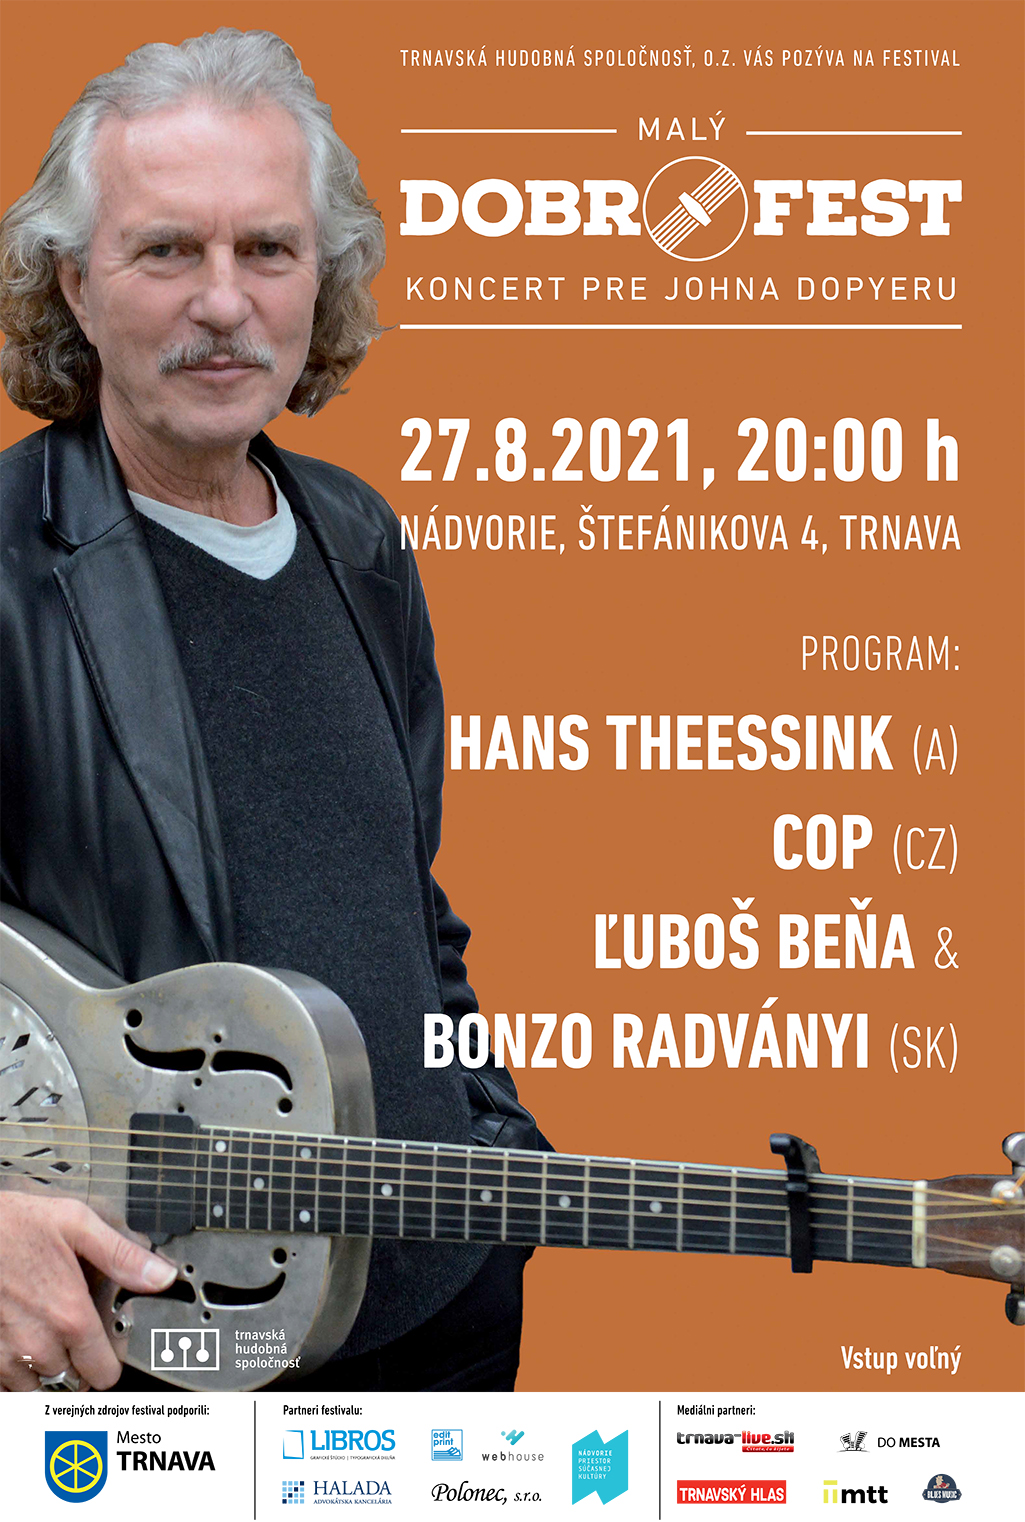 Festival Malý Dobrofest 2021 v Trnave je Koncert pre Johna Dopyeru